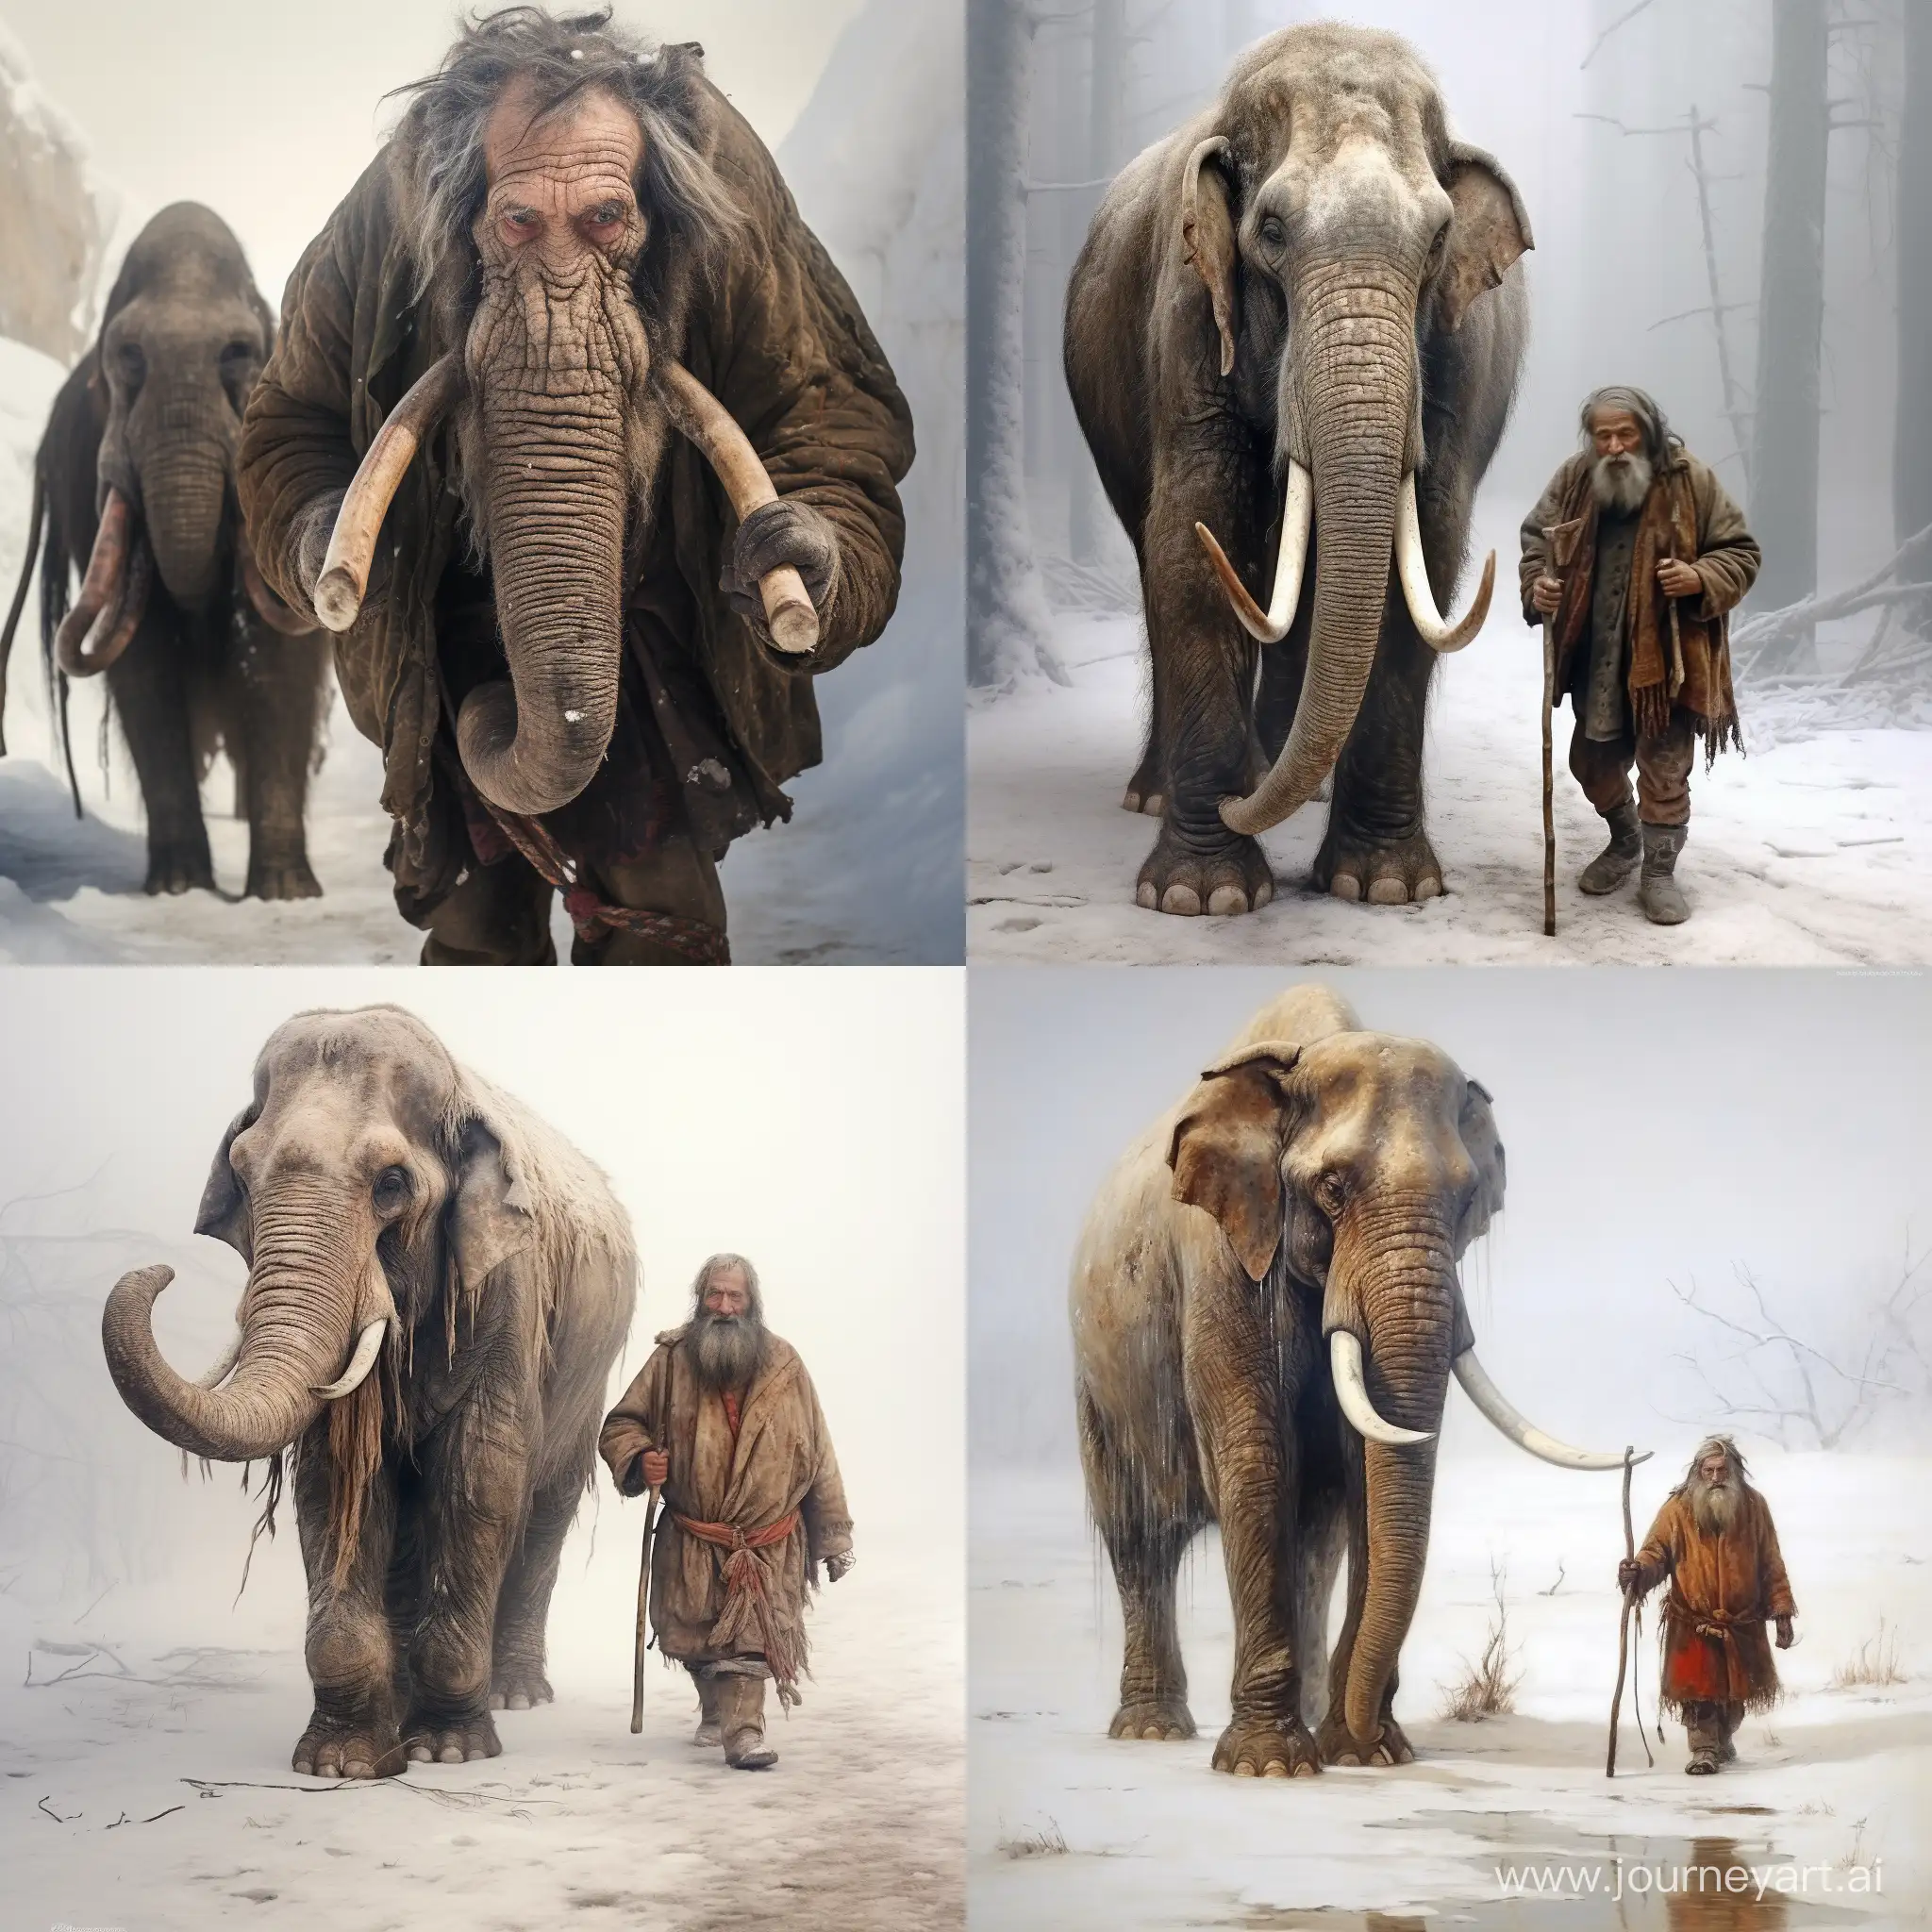 Winter-Stroll-with-Old-Spanish-Beggar-Alongside-Mammoth-in-Siberia